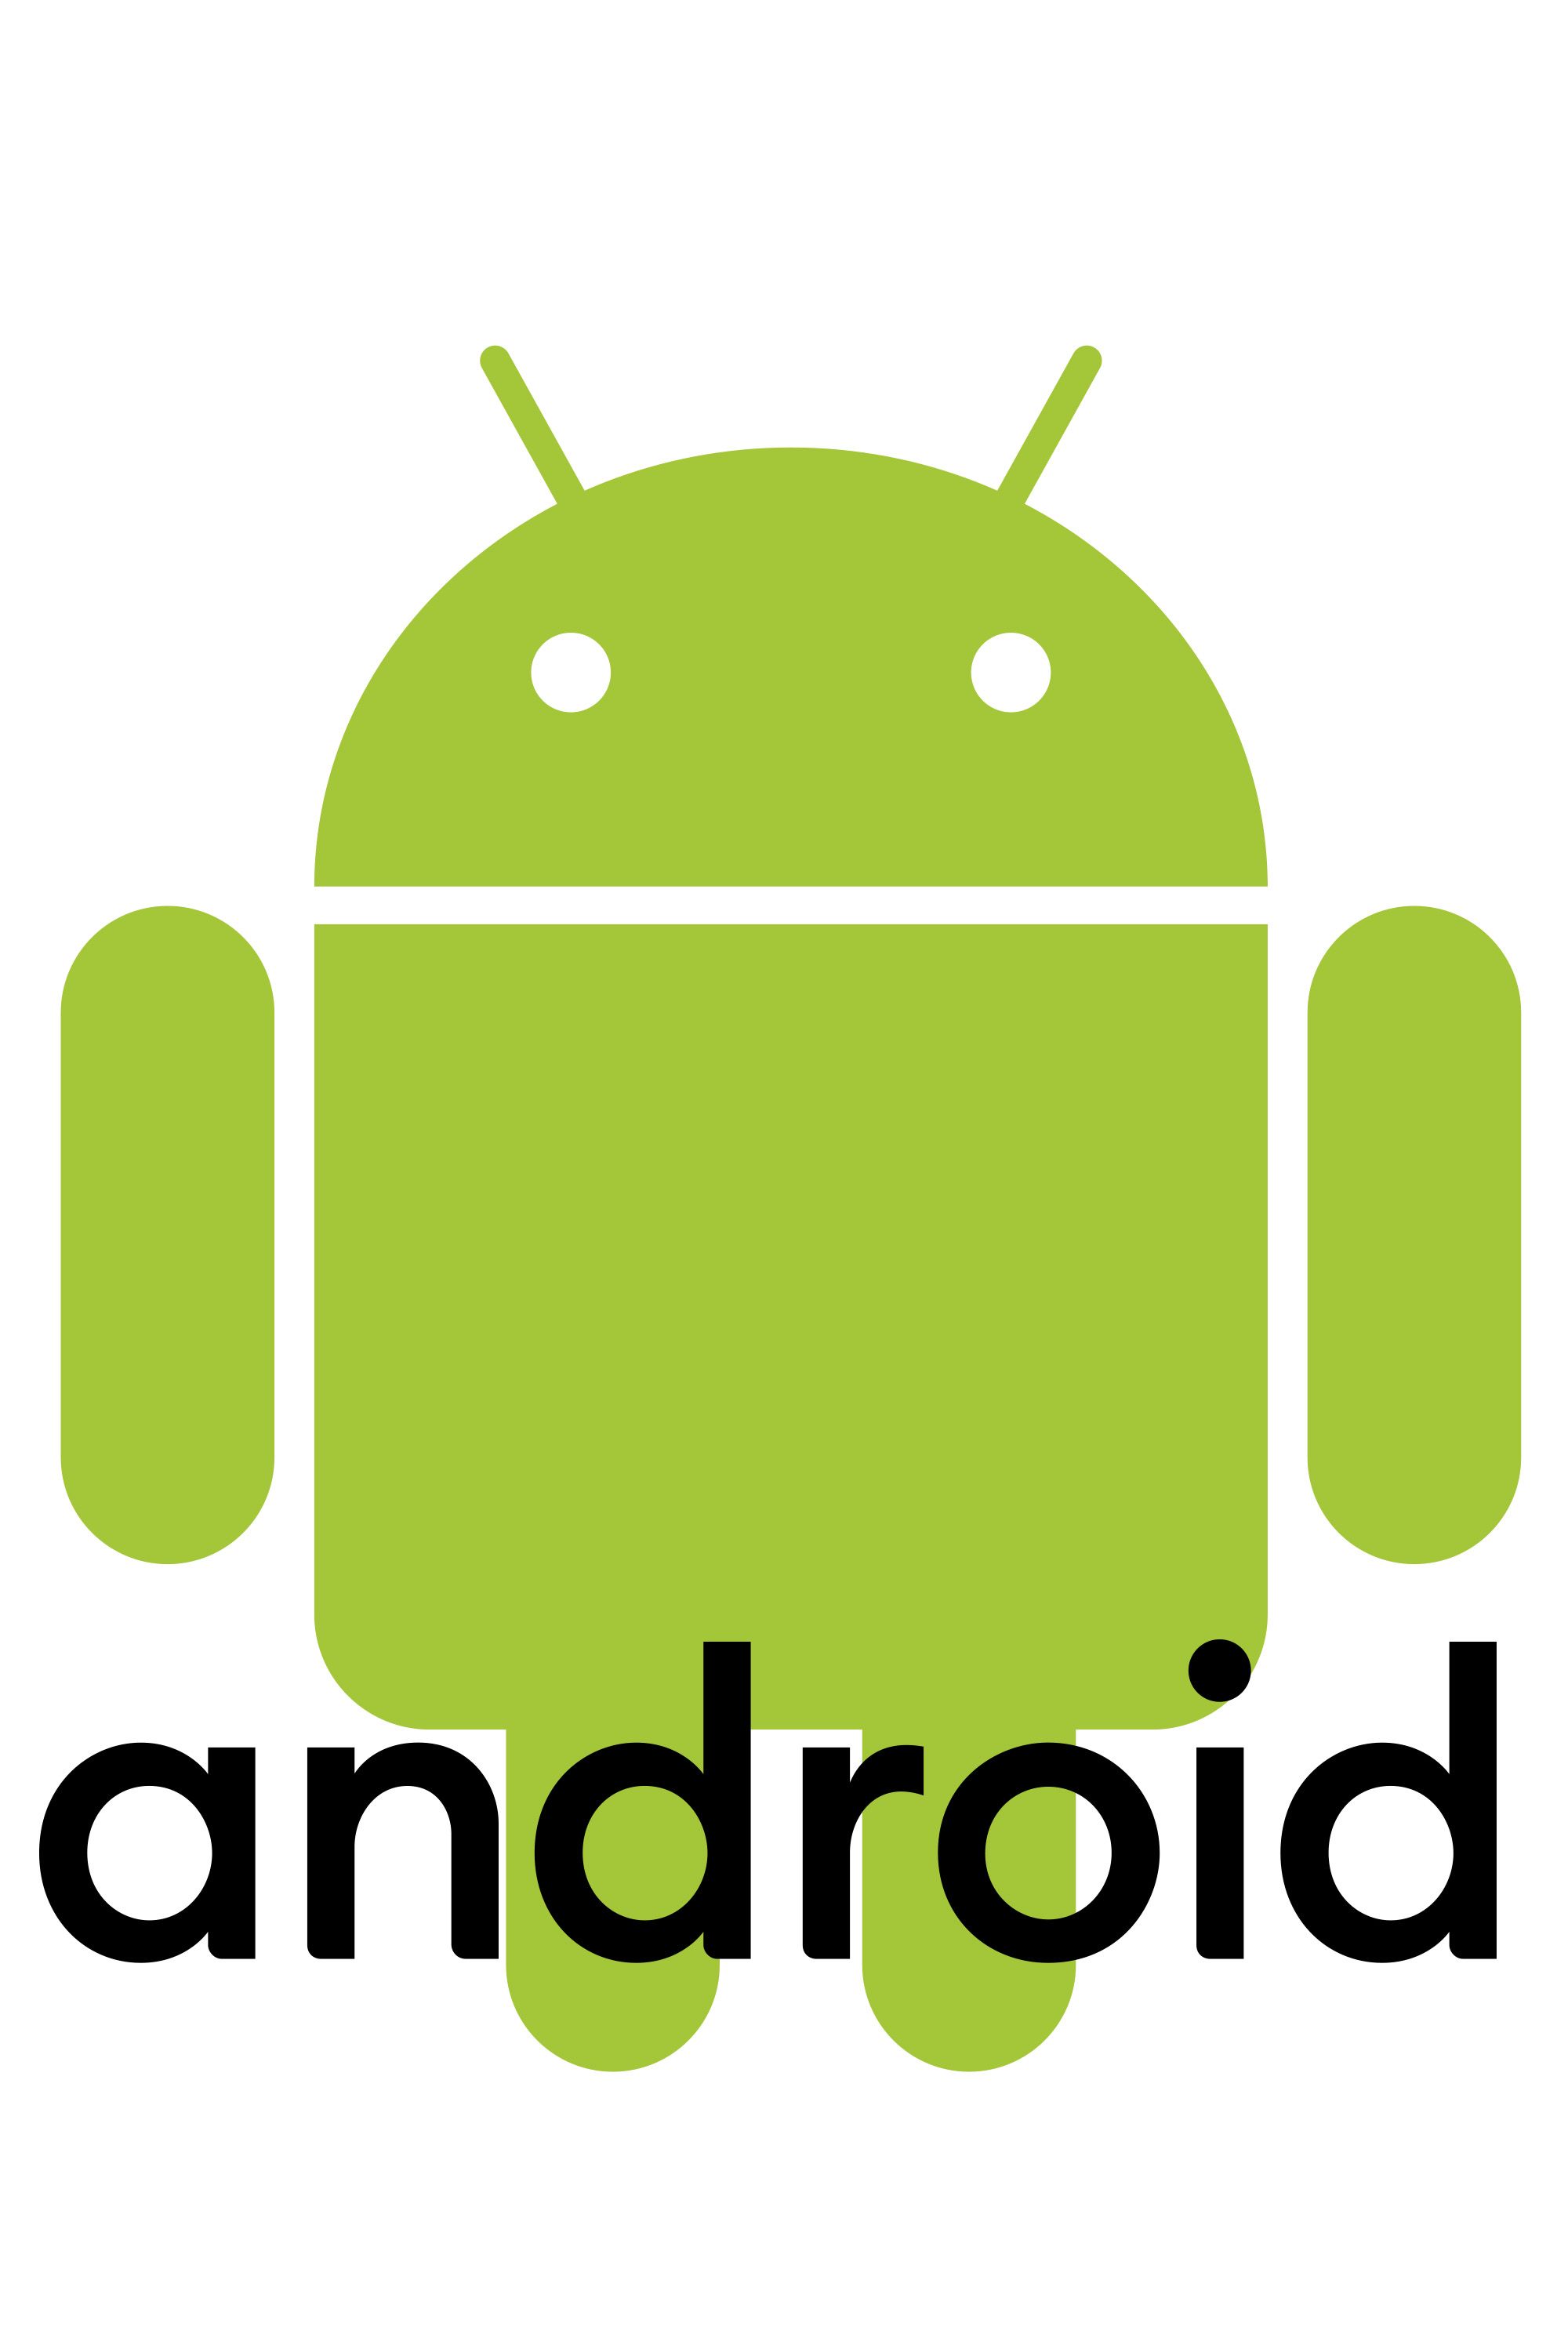 android-phone-gaming-platform